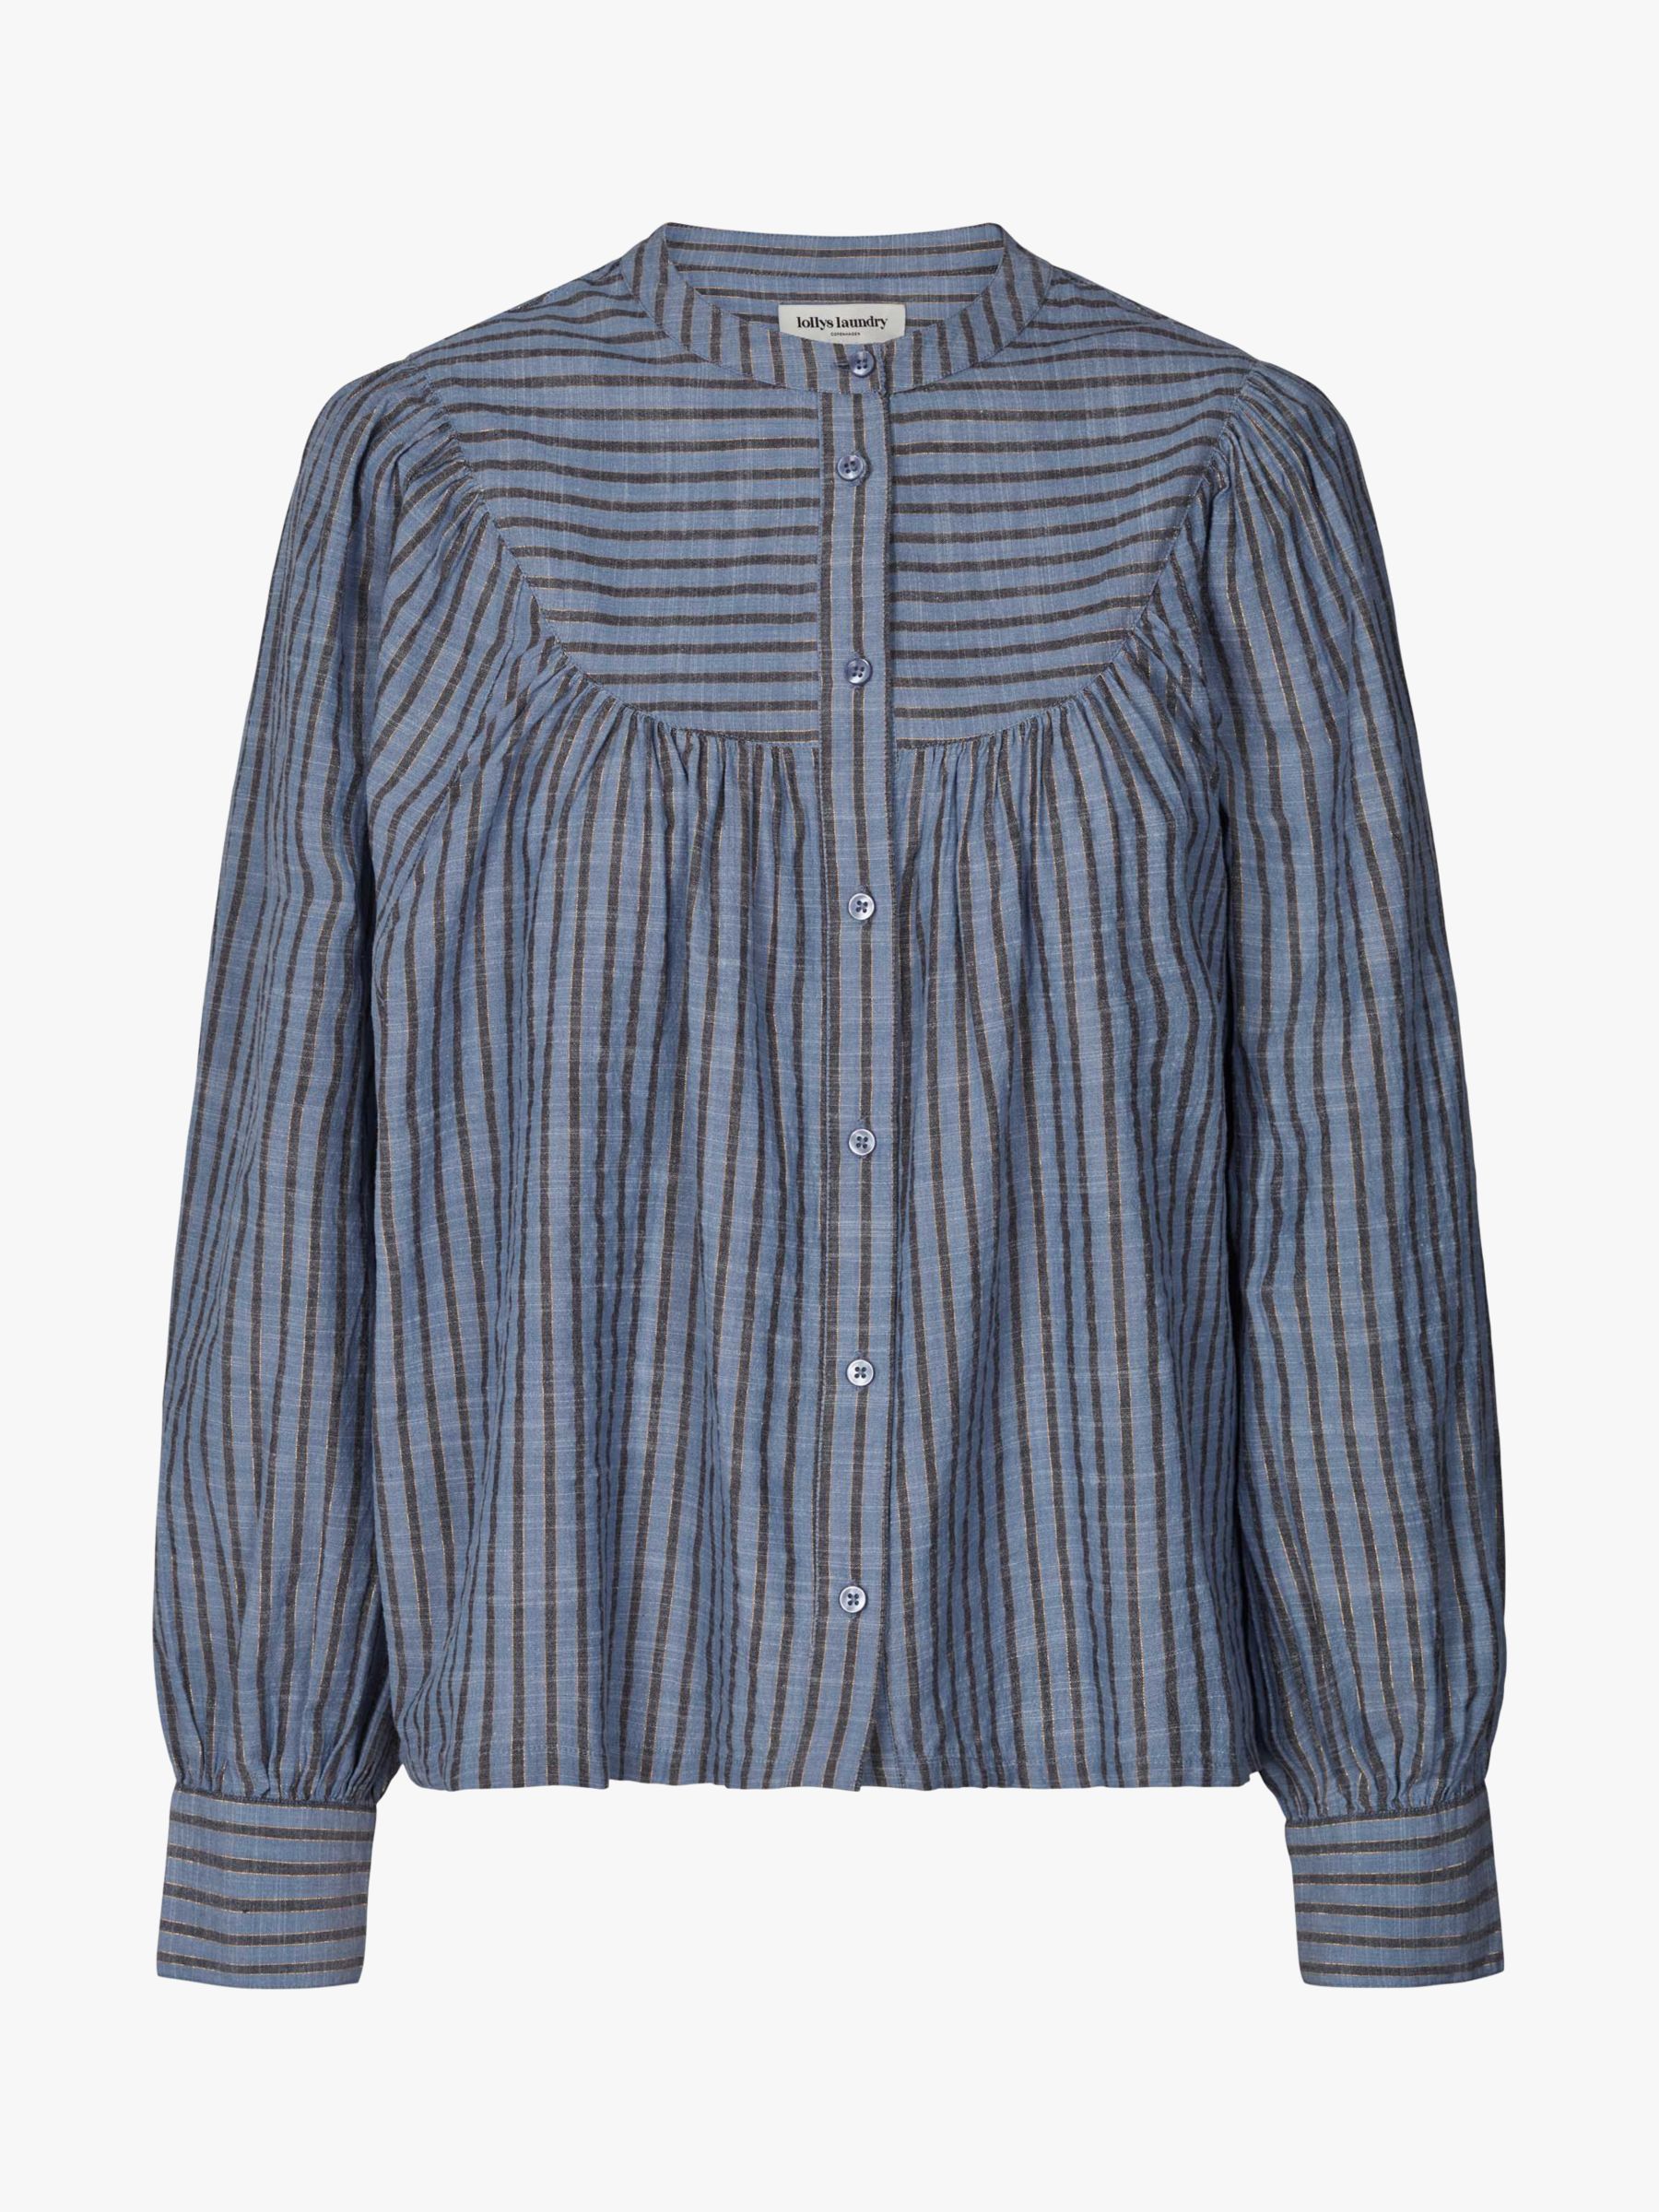 Lollys Laundry Alicia Stripe Shirt, Blue Stripe at John Lewis & Partners